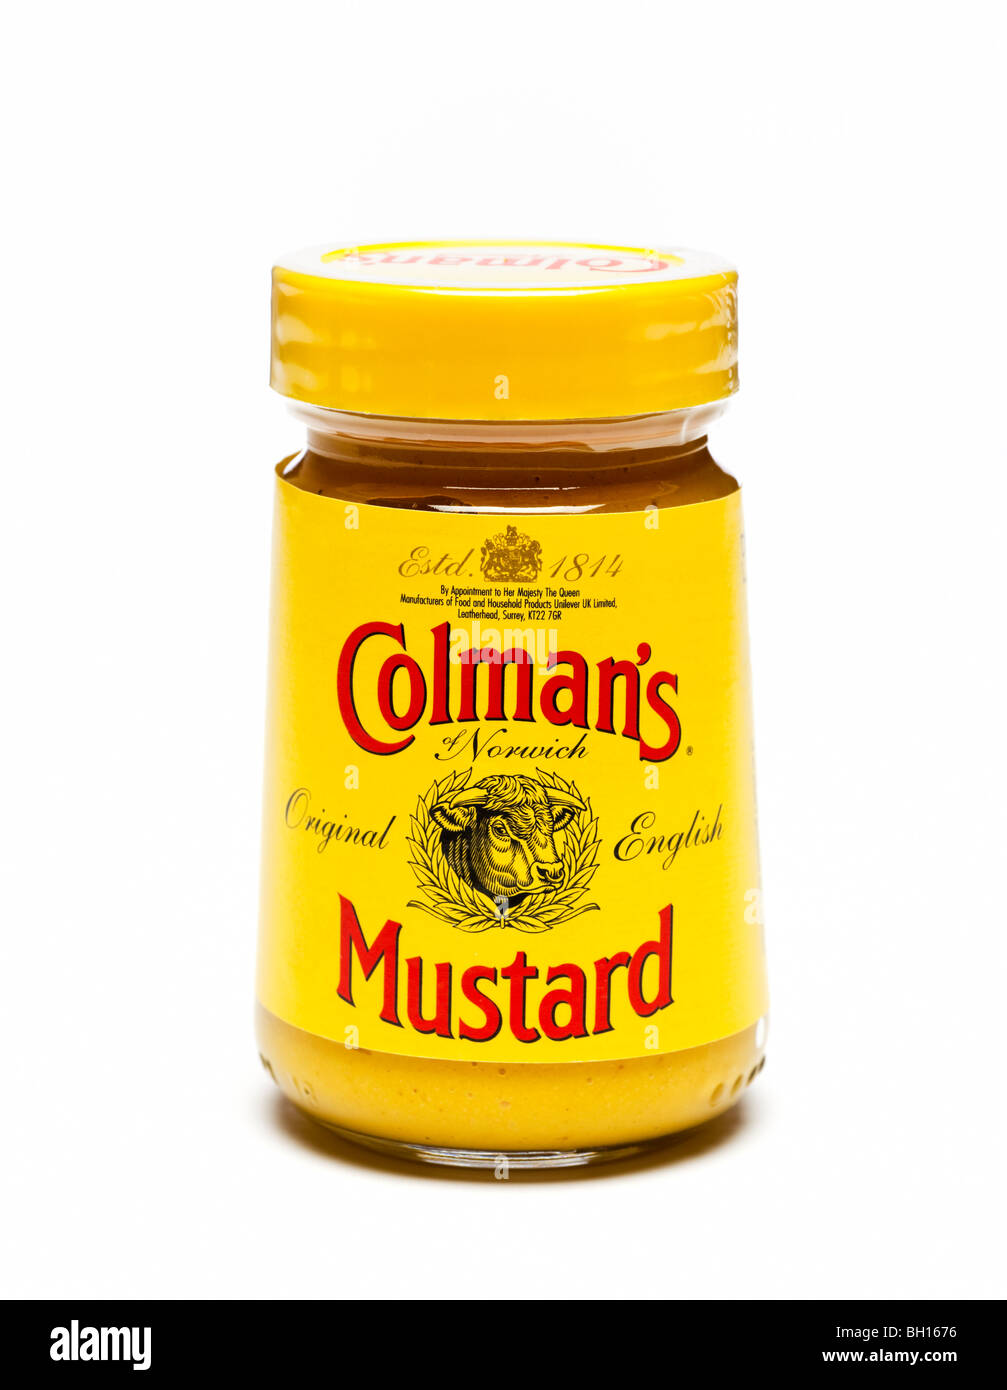 Jar of Colman's English Mustard close up Stock Photo